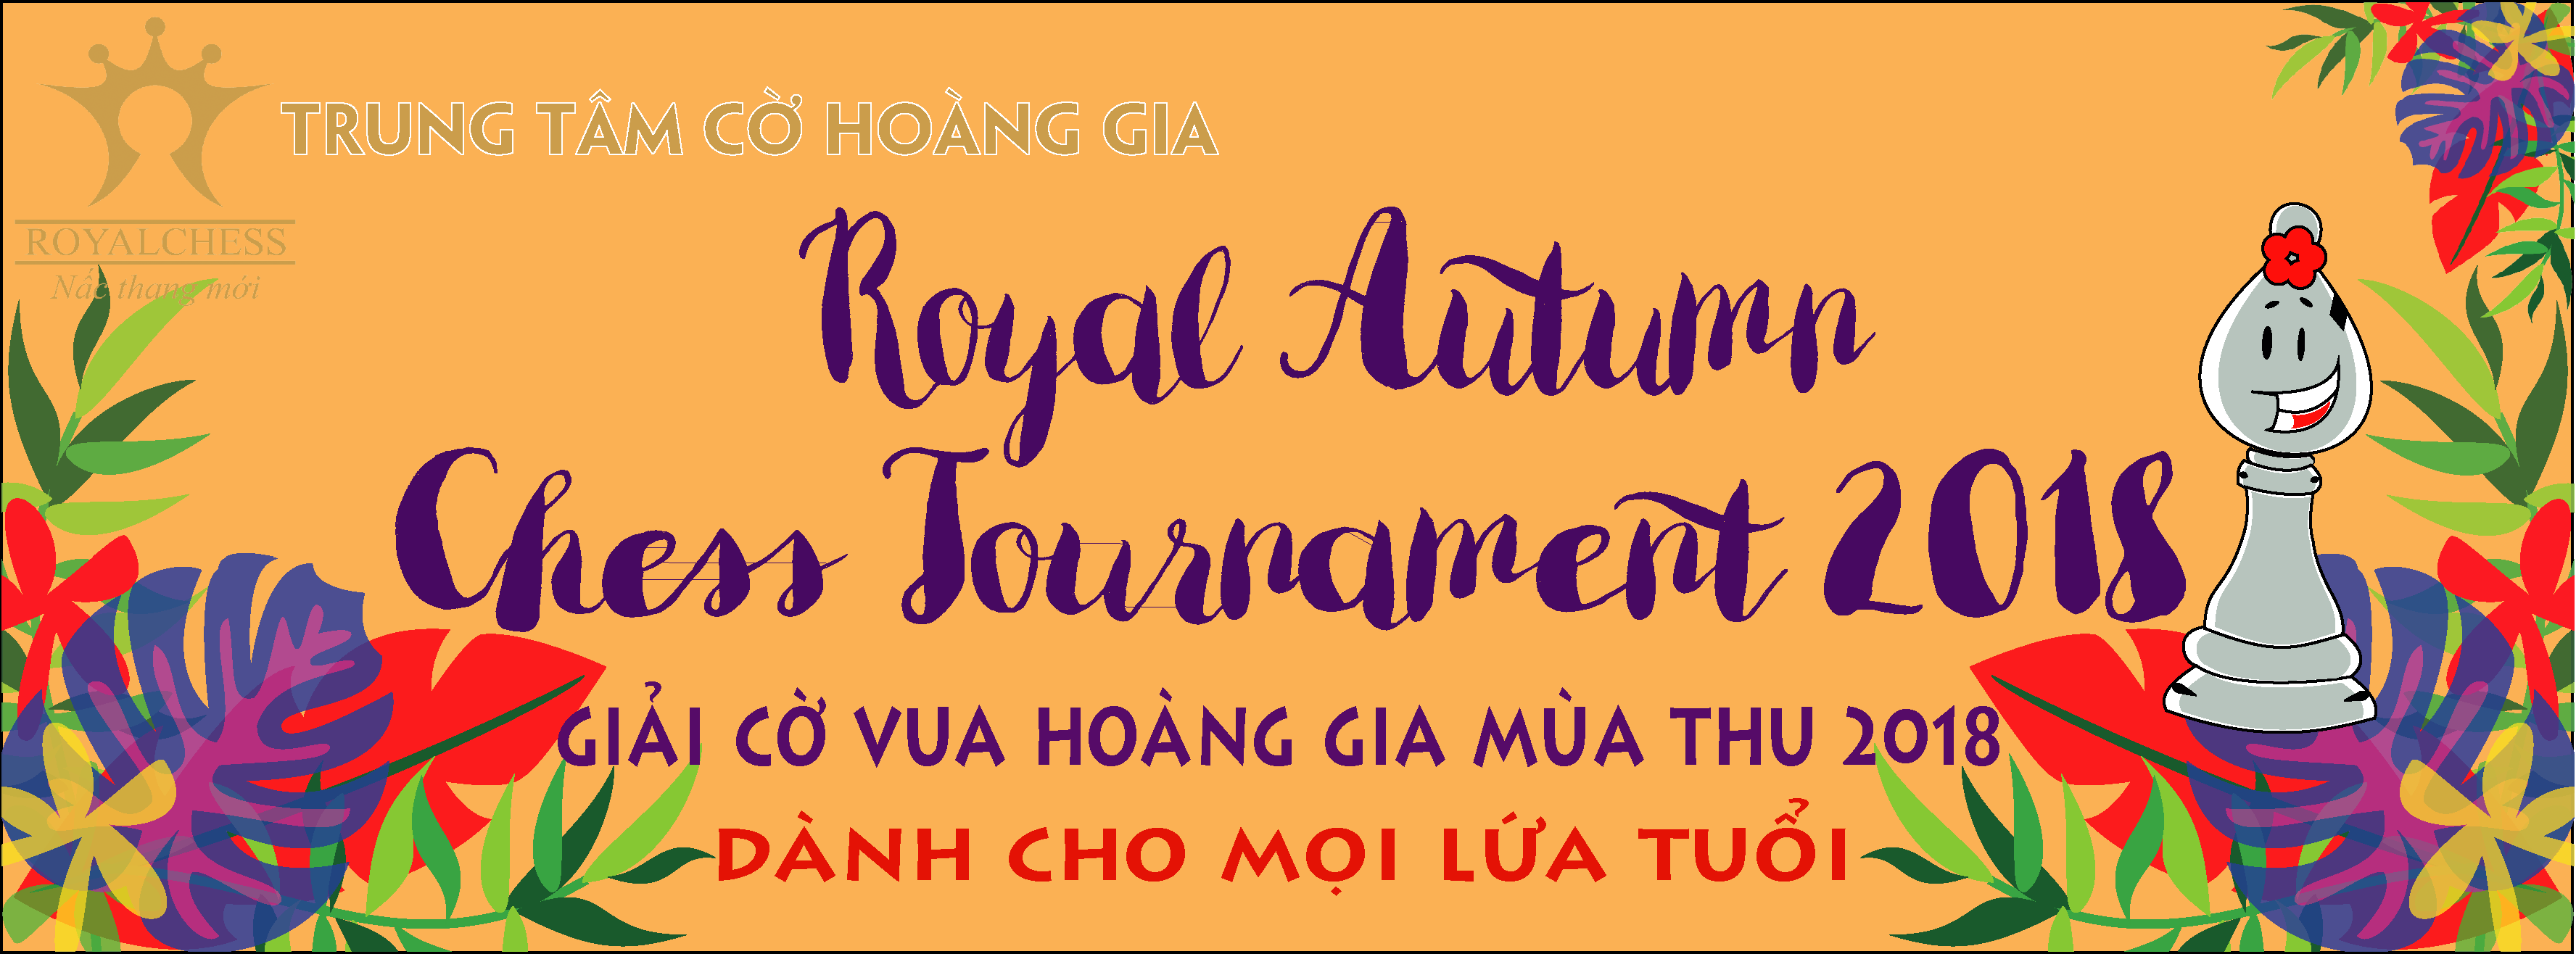 royal-autumn-20118-banner.jpg